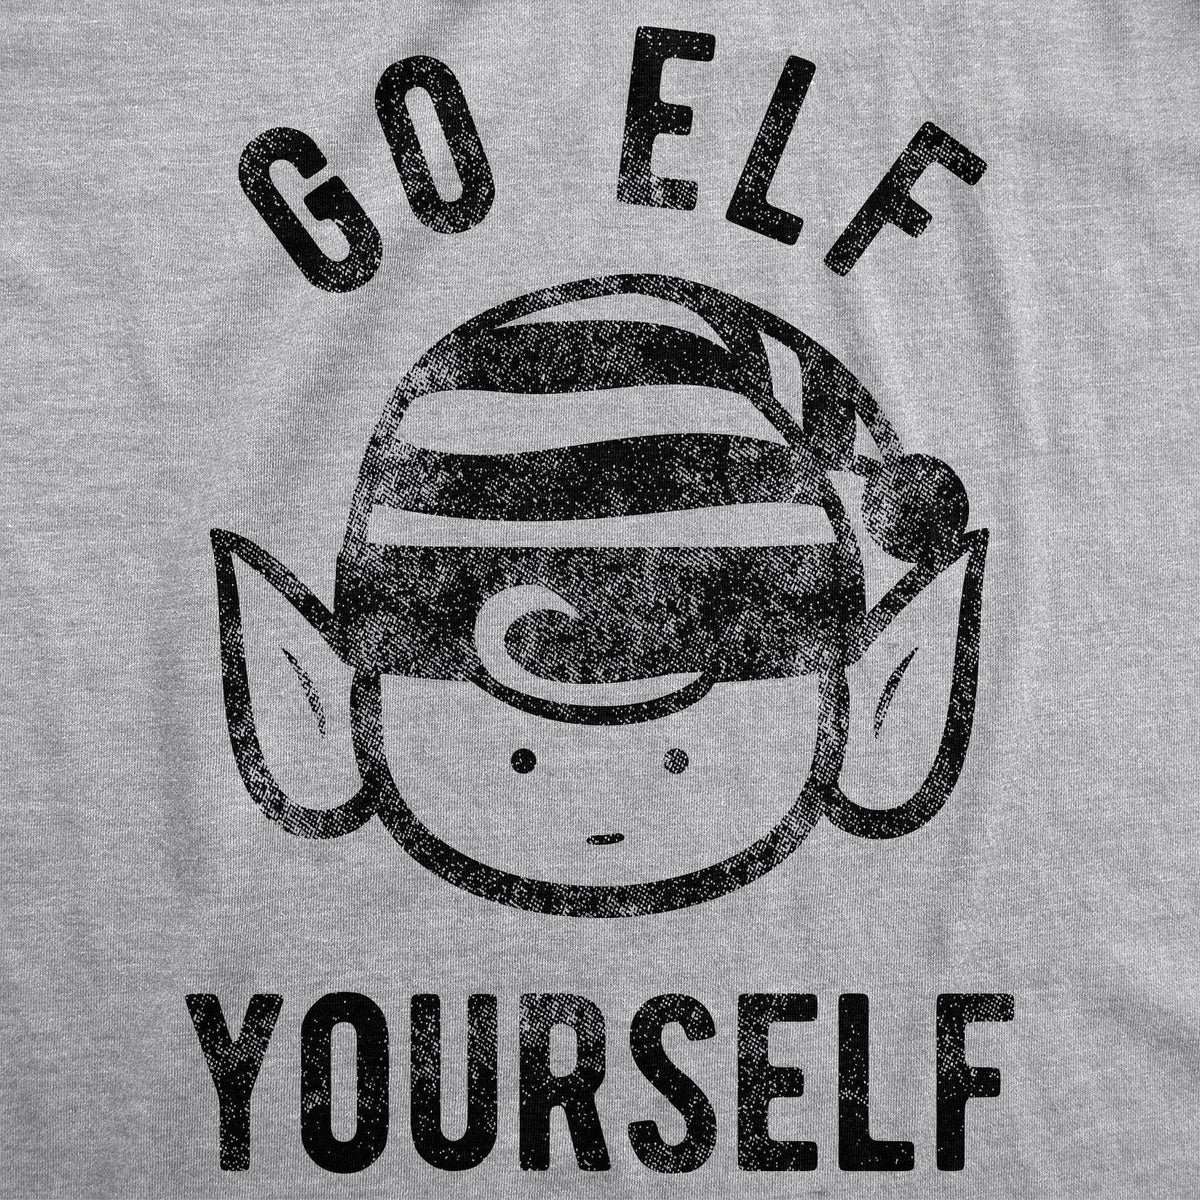 Go Elf Yourself Women&#39;s Tshirt - Crazy Dog T-Shirts